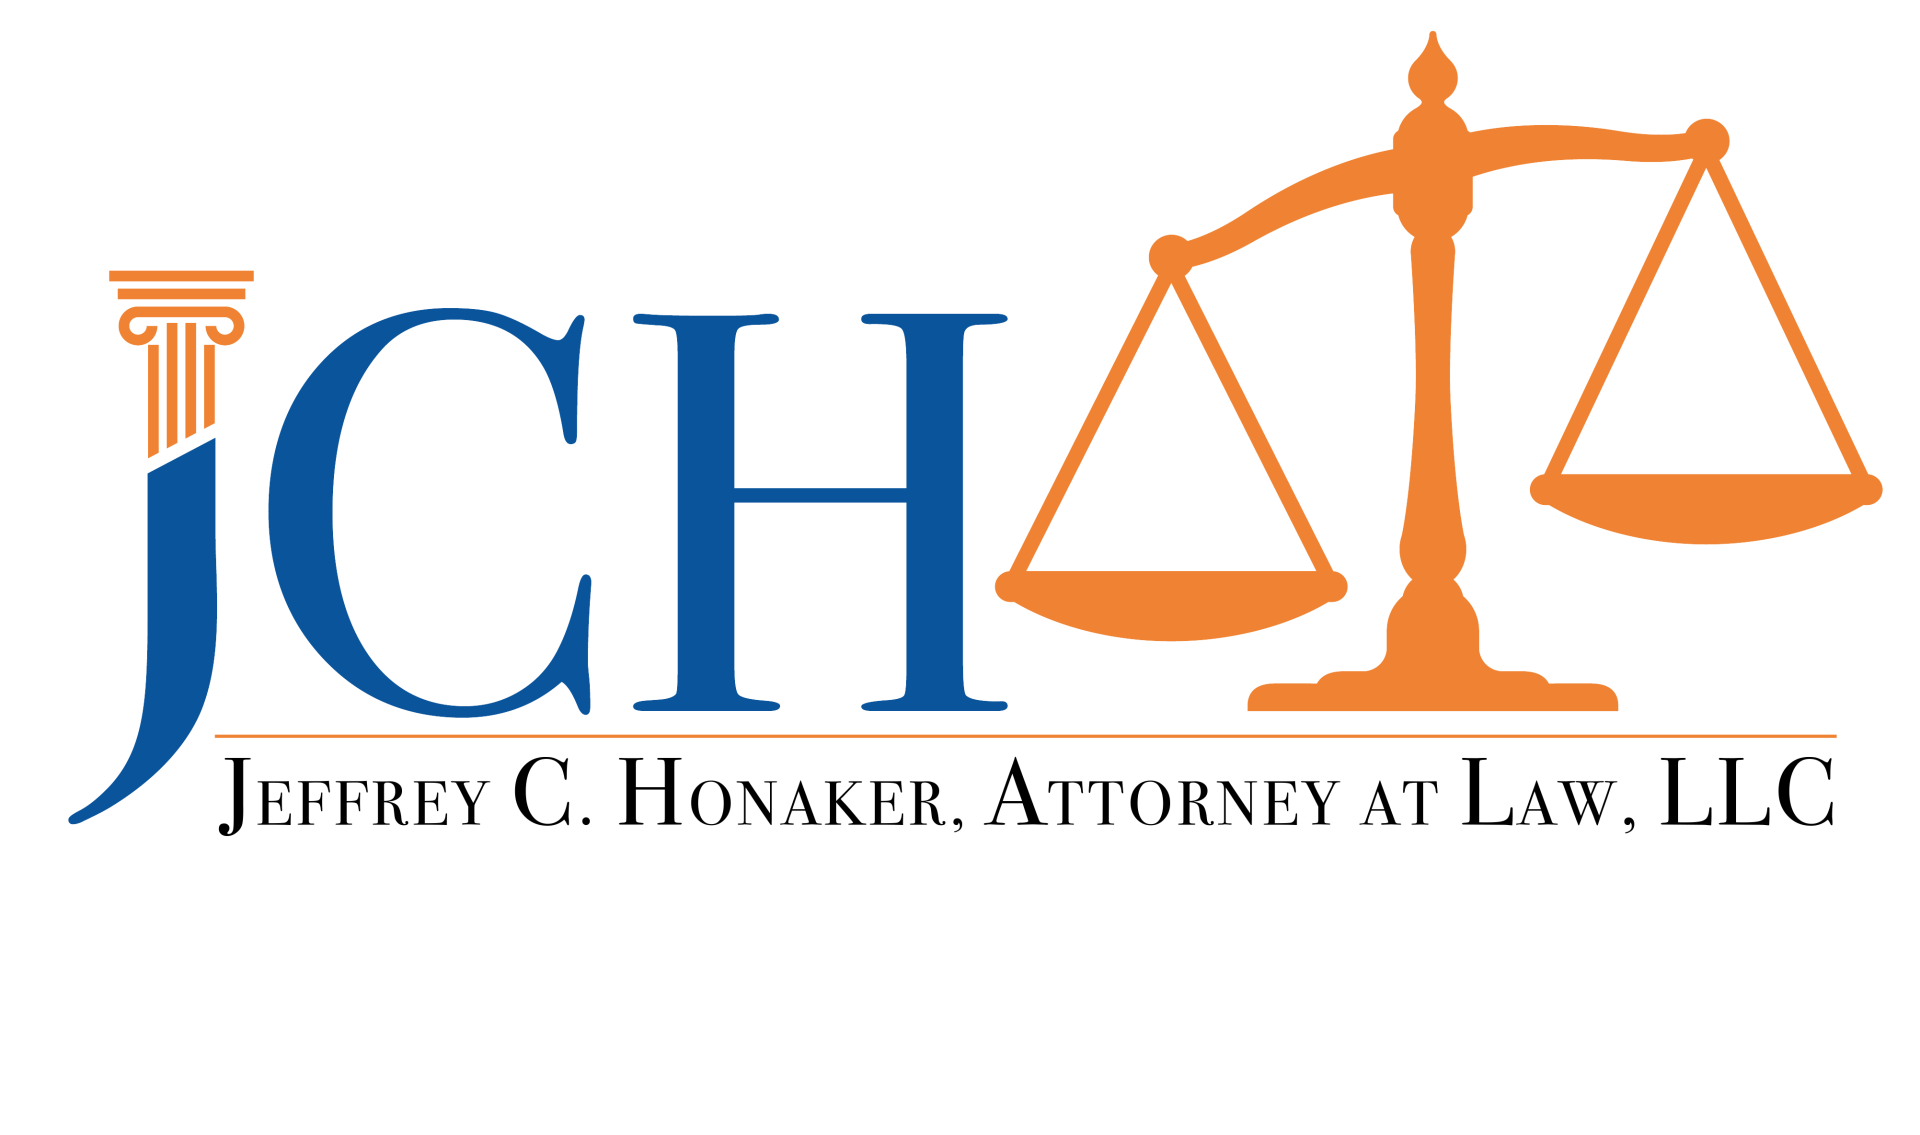 Jeffrey C. Honaker, Attorney at Law, LLC